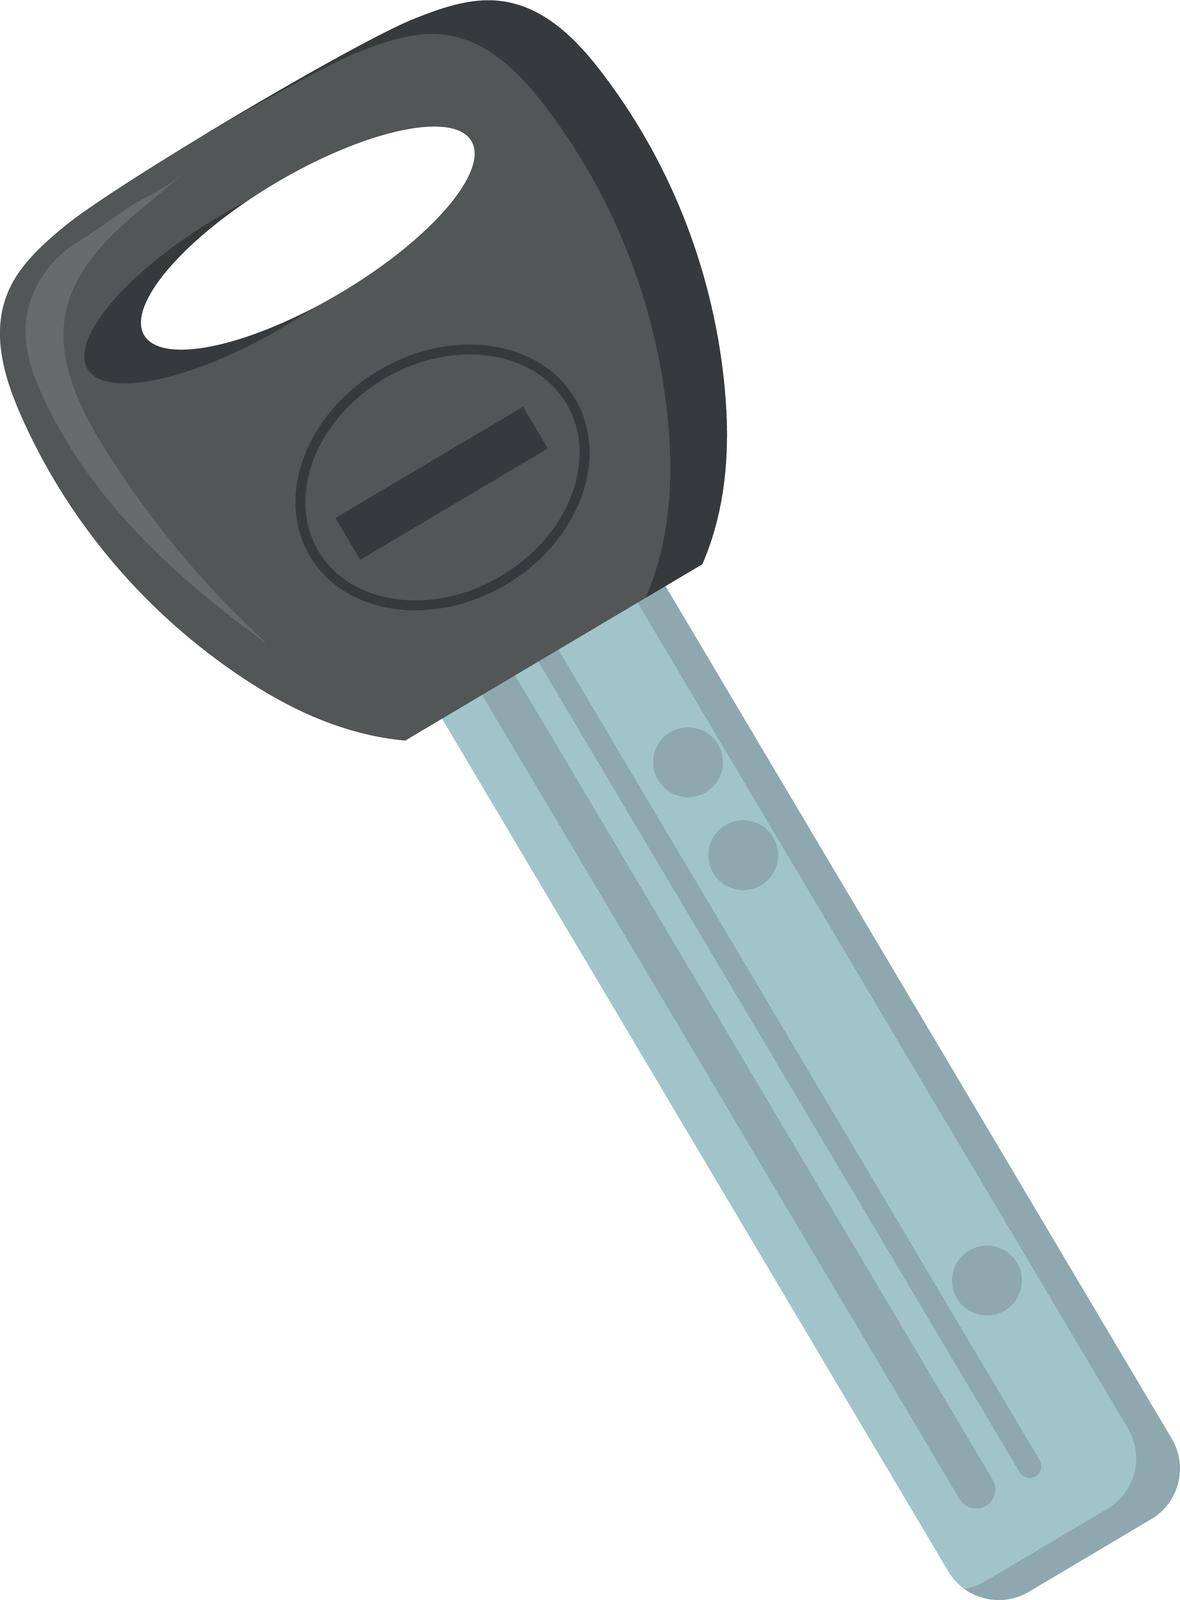 Modern key. Security symbol. Cartoon safety icon isolated on white background